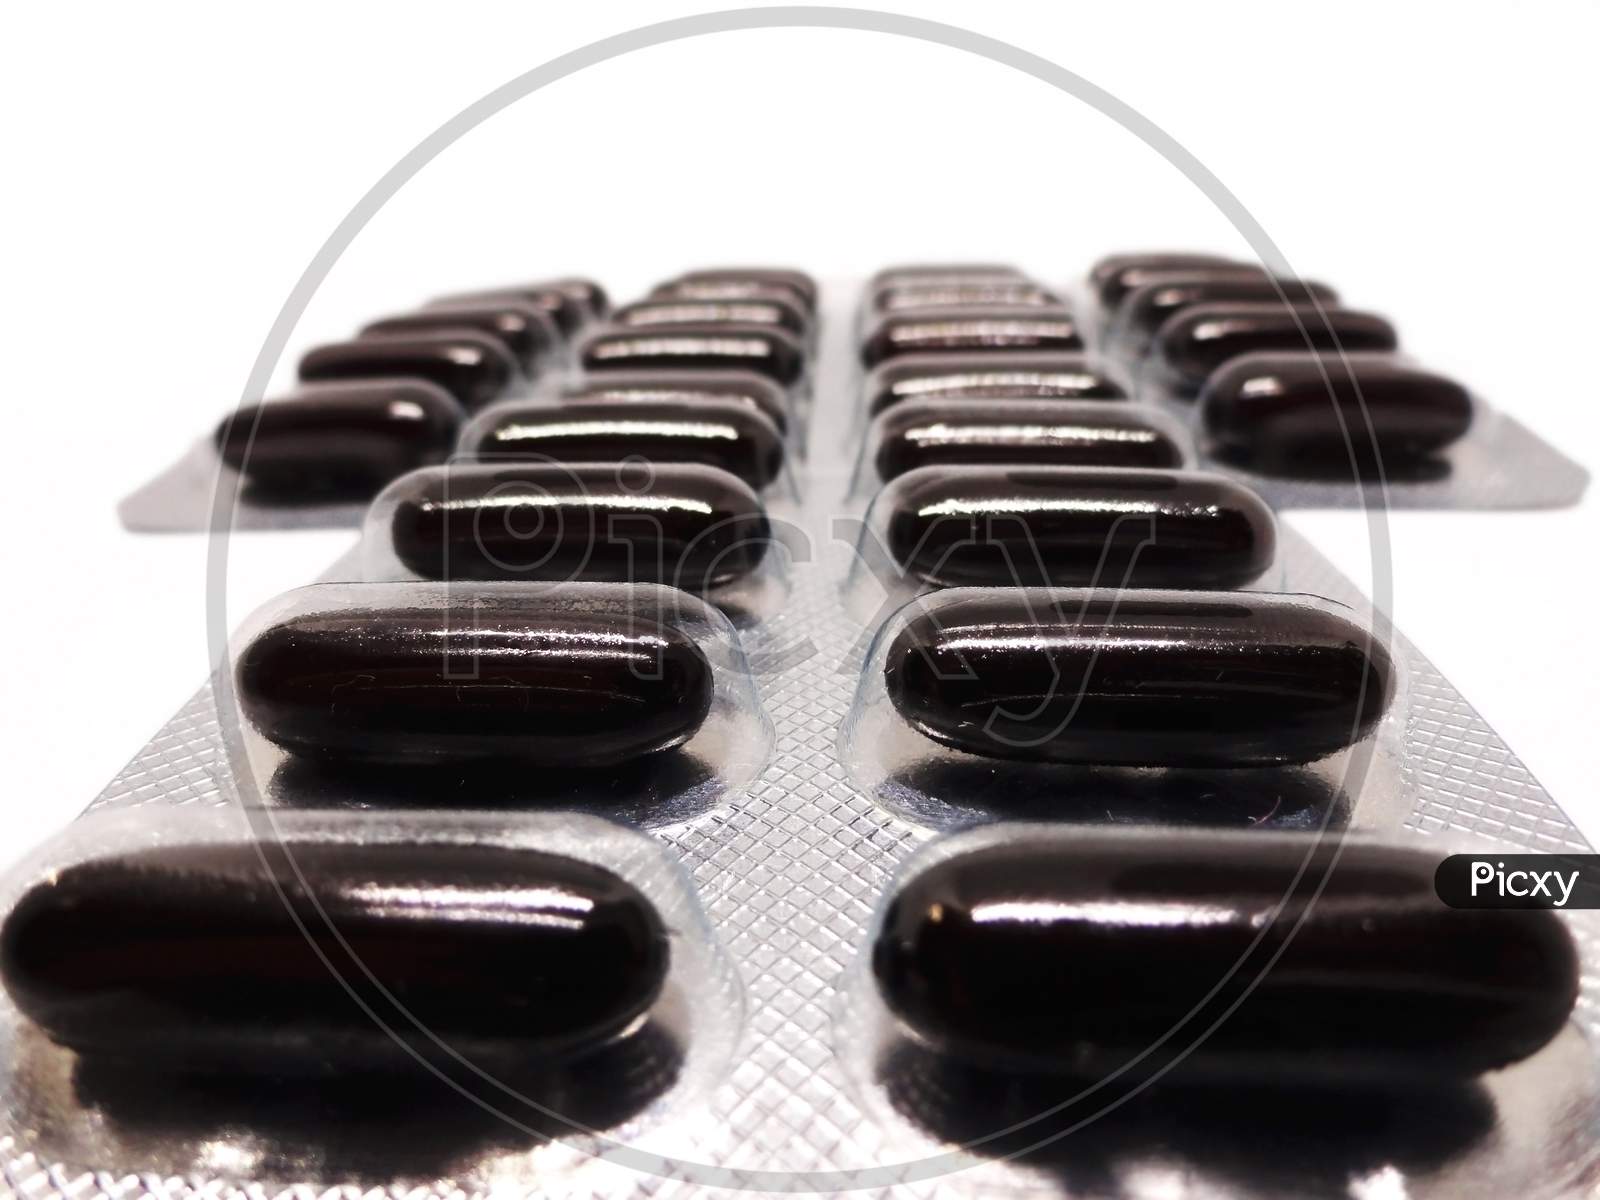 Black multi-vitamin capsules arranges in column on white background